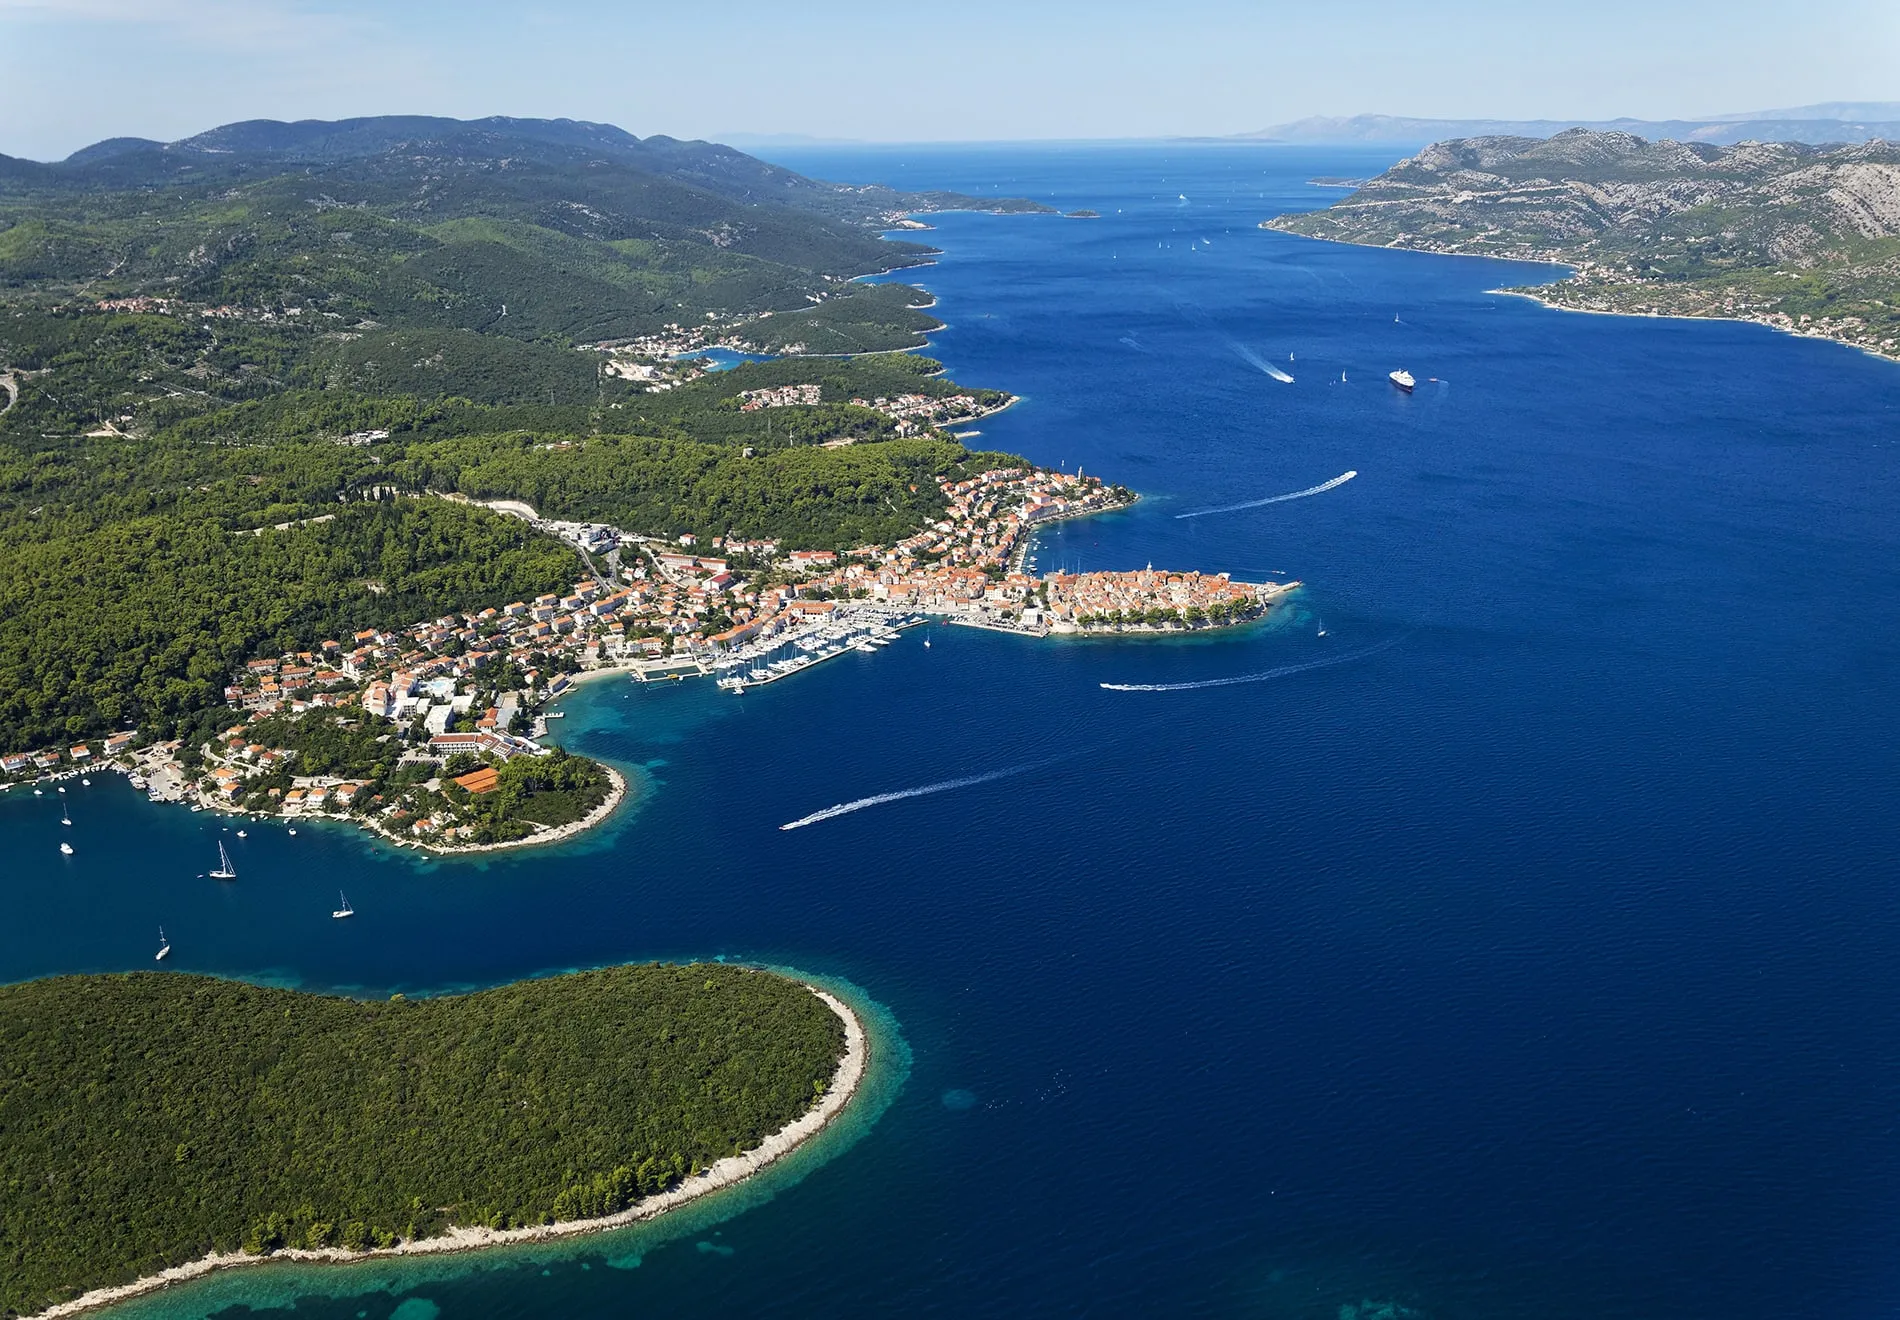 Embrace the allure of Croatia's coast and islands